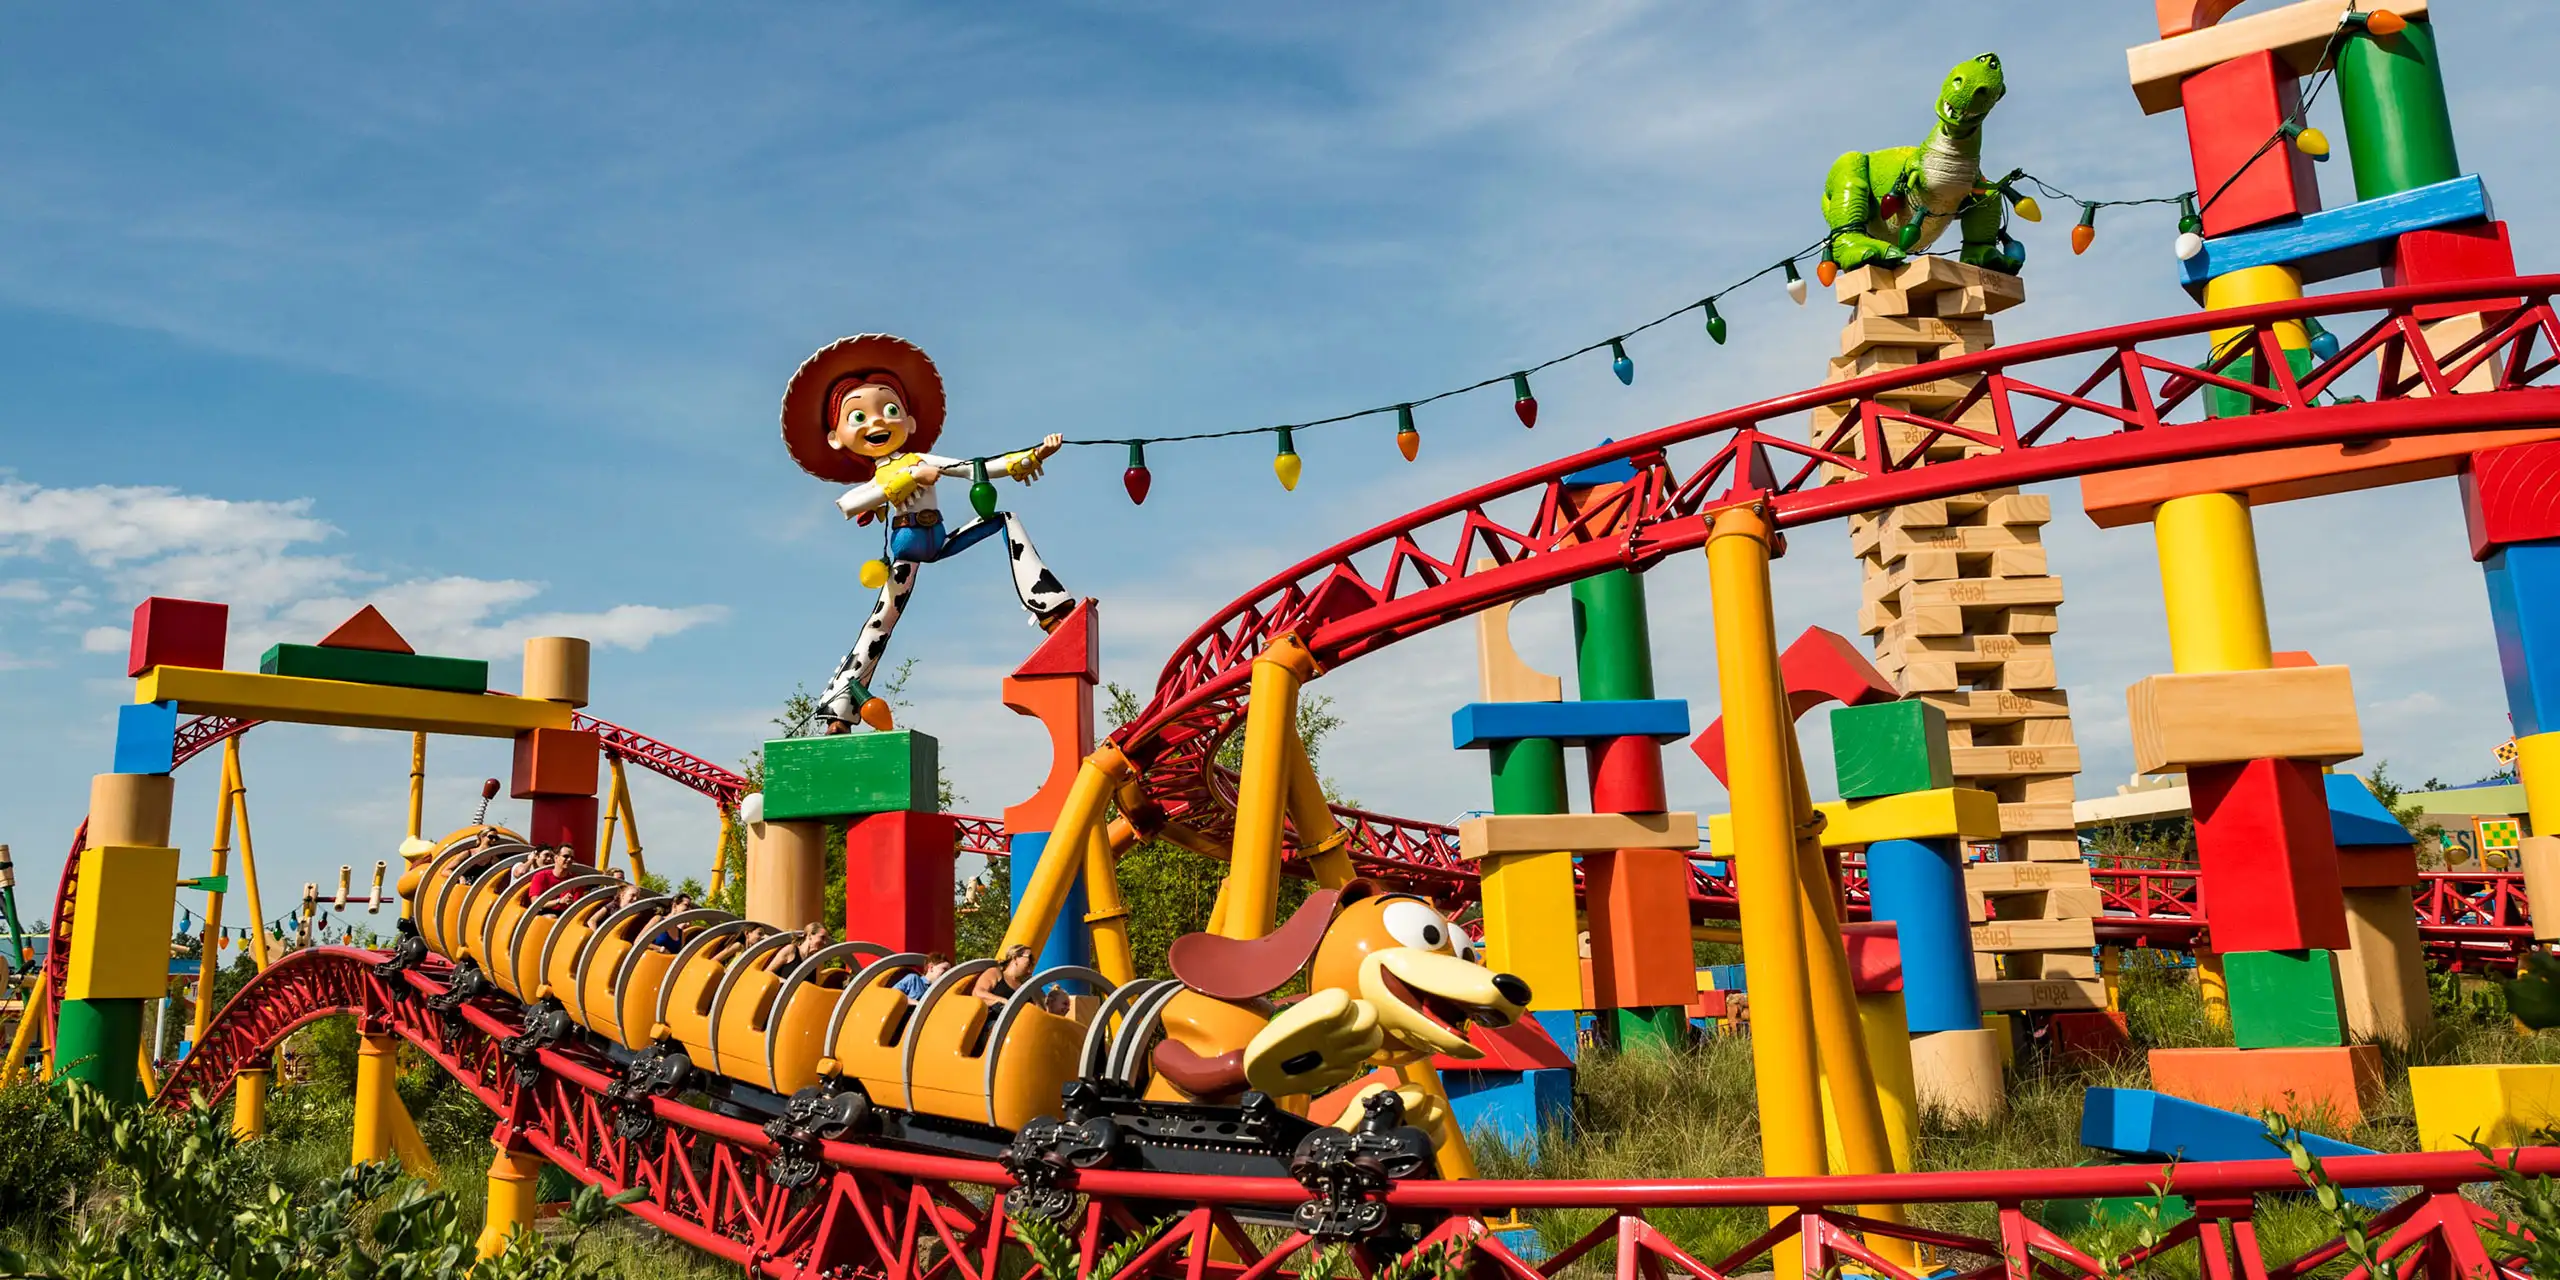 Slinky Dog Coaster at Toy Story Land at Disney World in Orlando; Courtesy of Disney